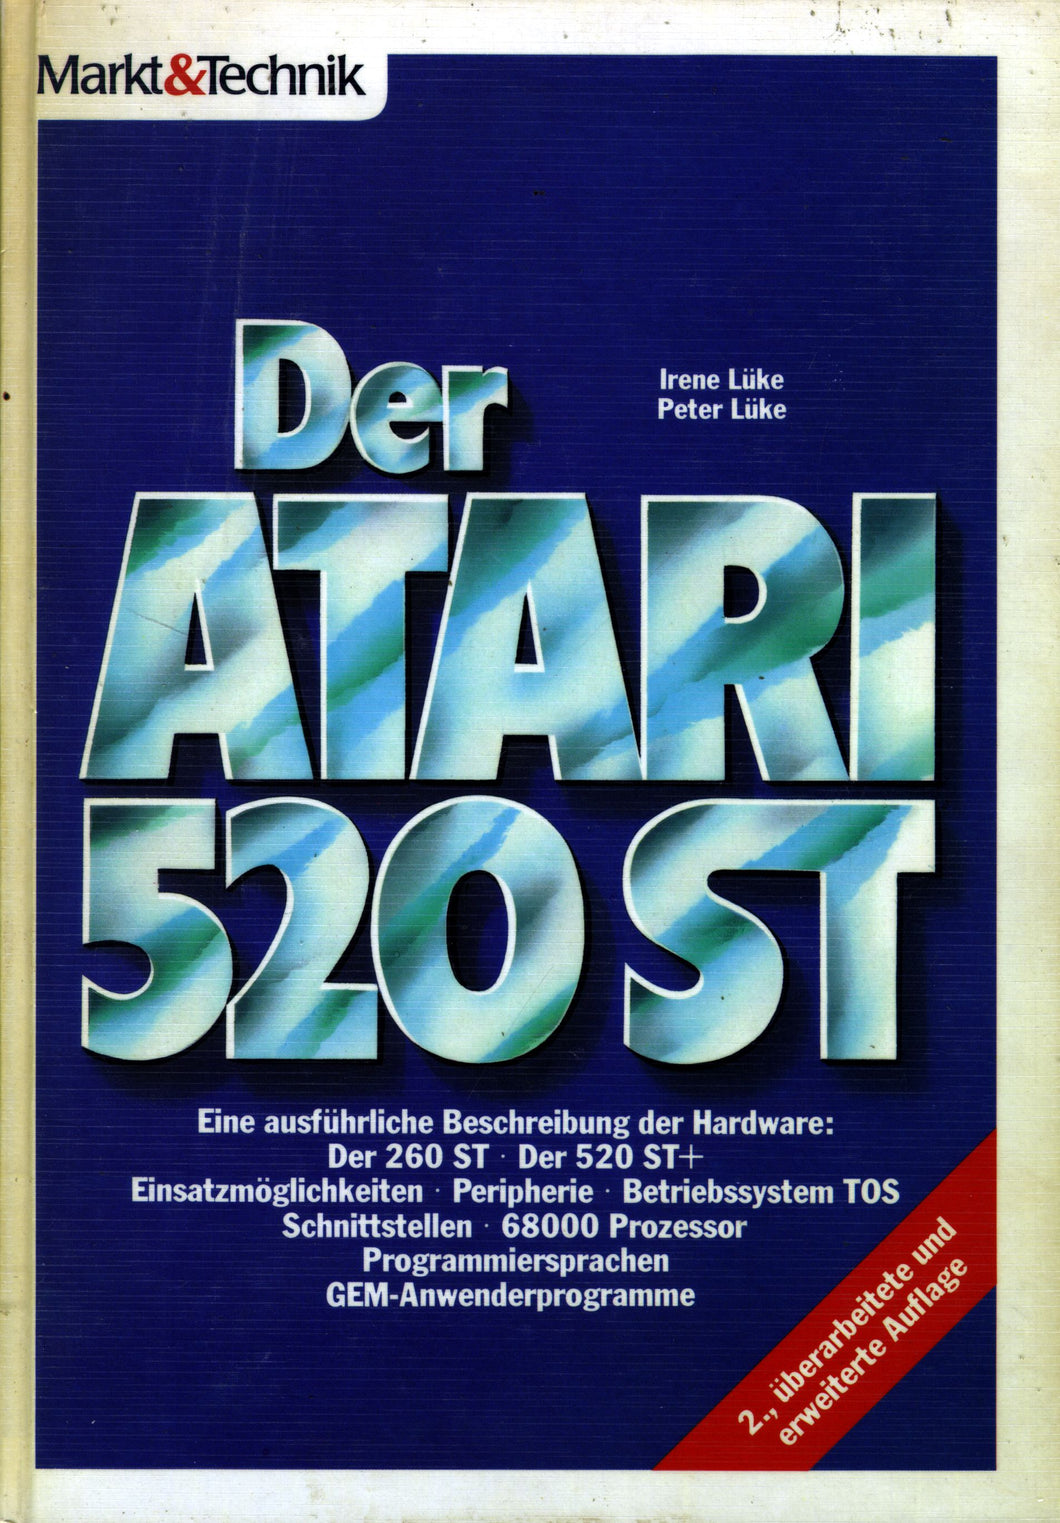 Der ATARI 520 ST